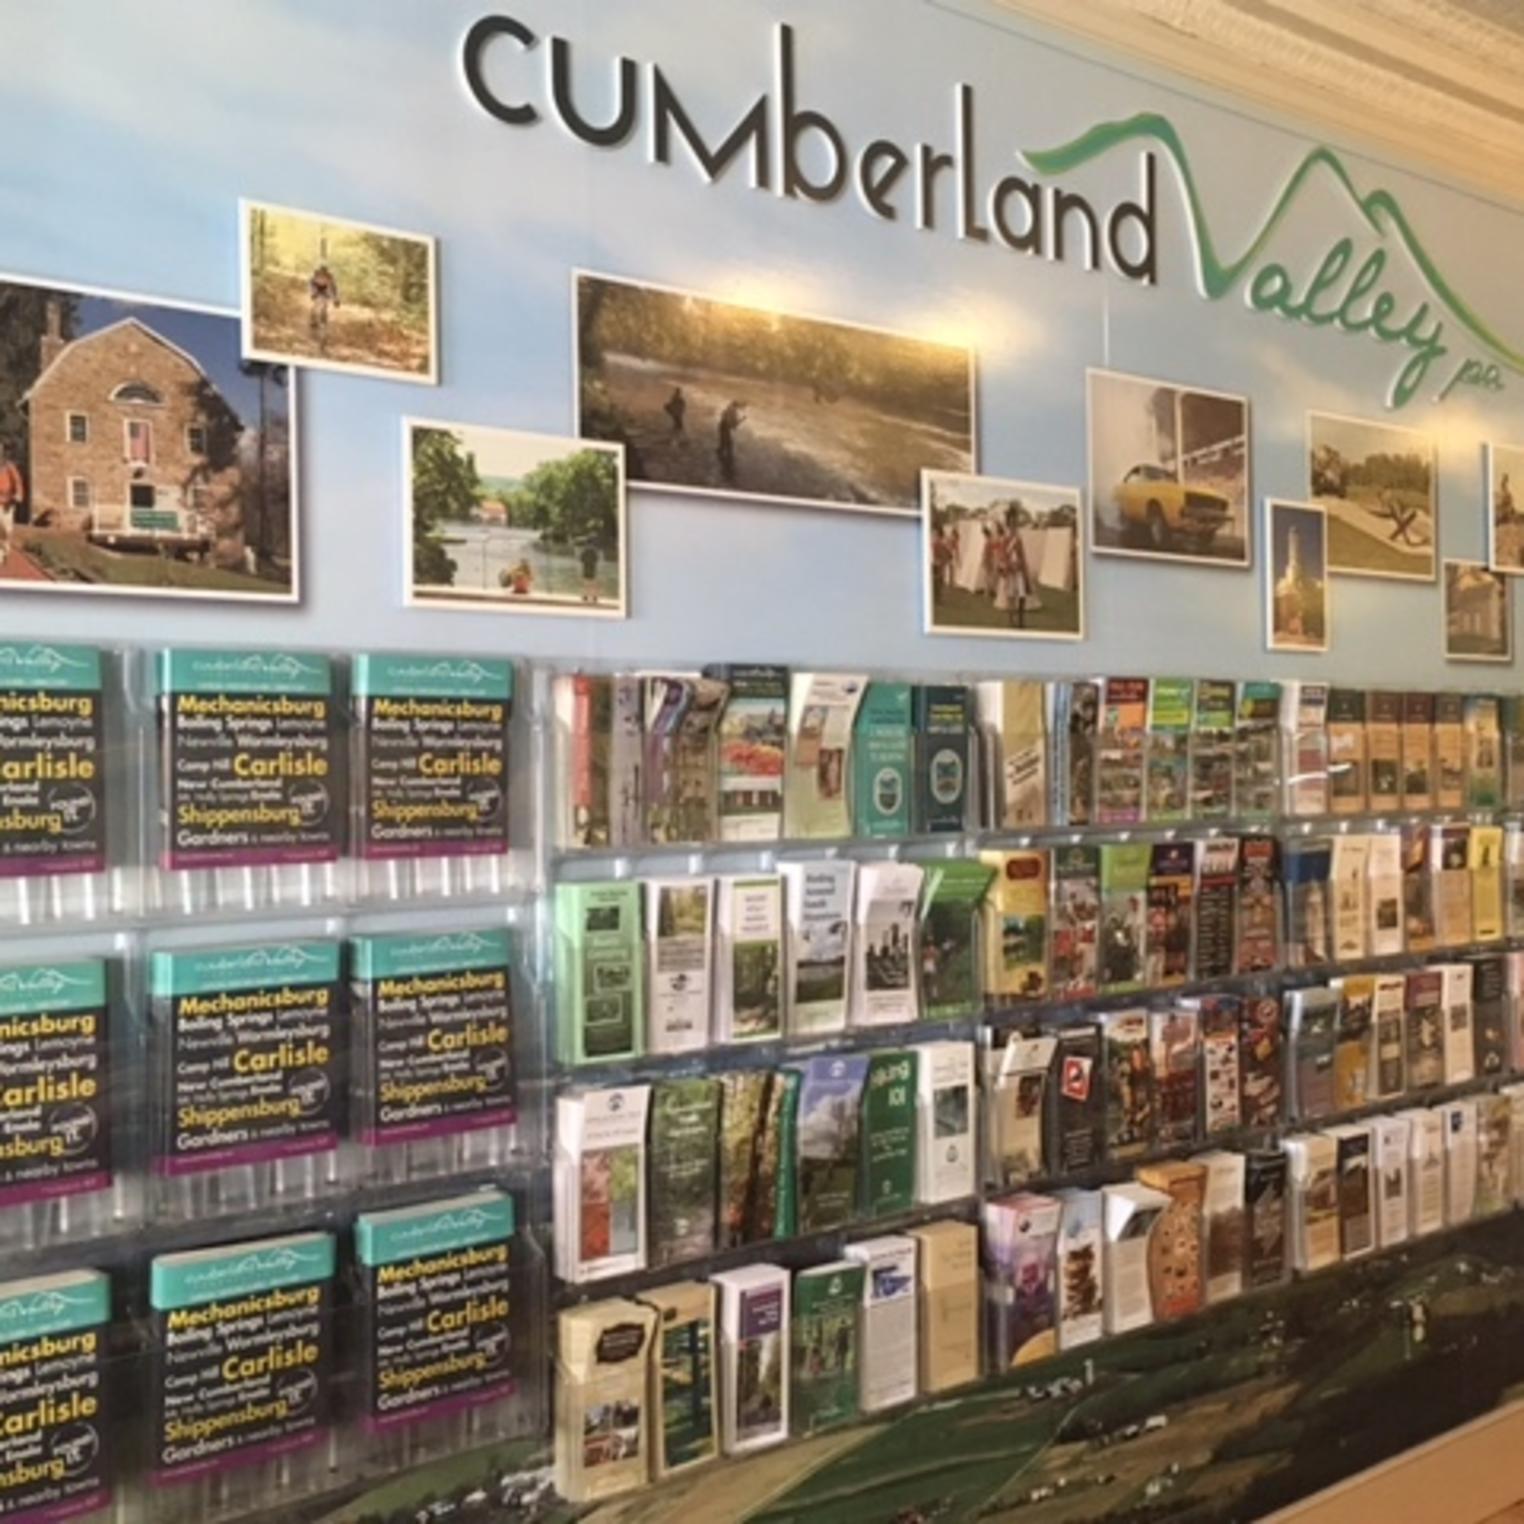 Cumberland Valley Visitors Center